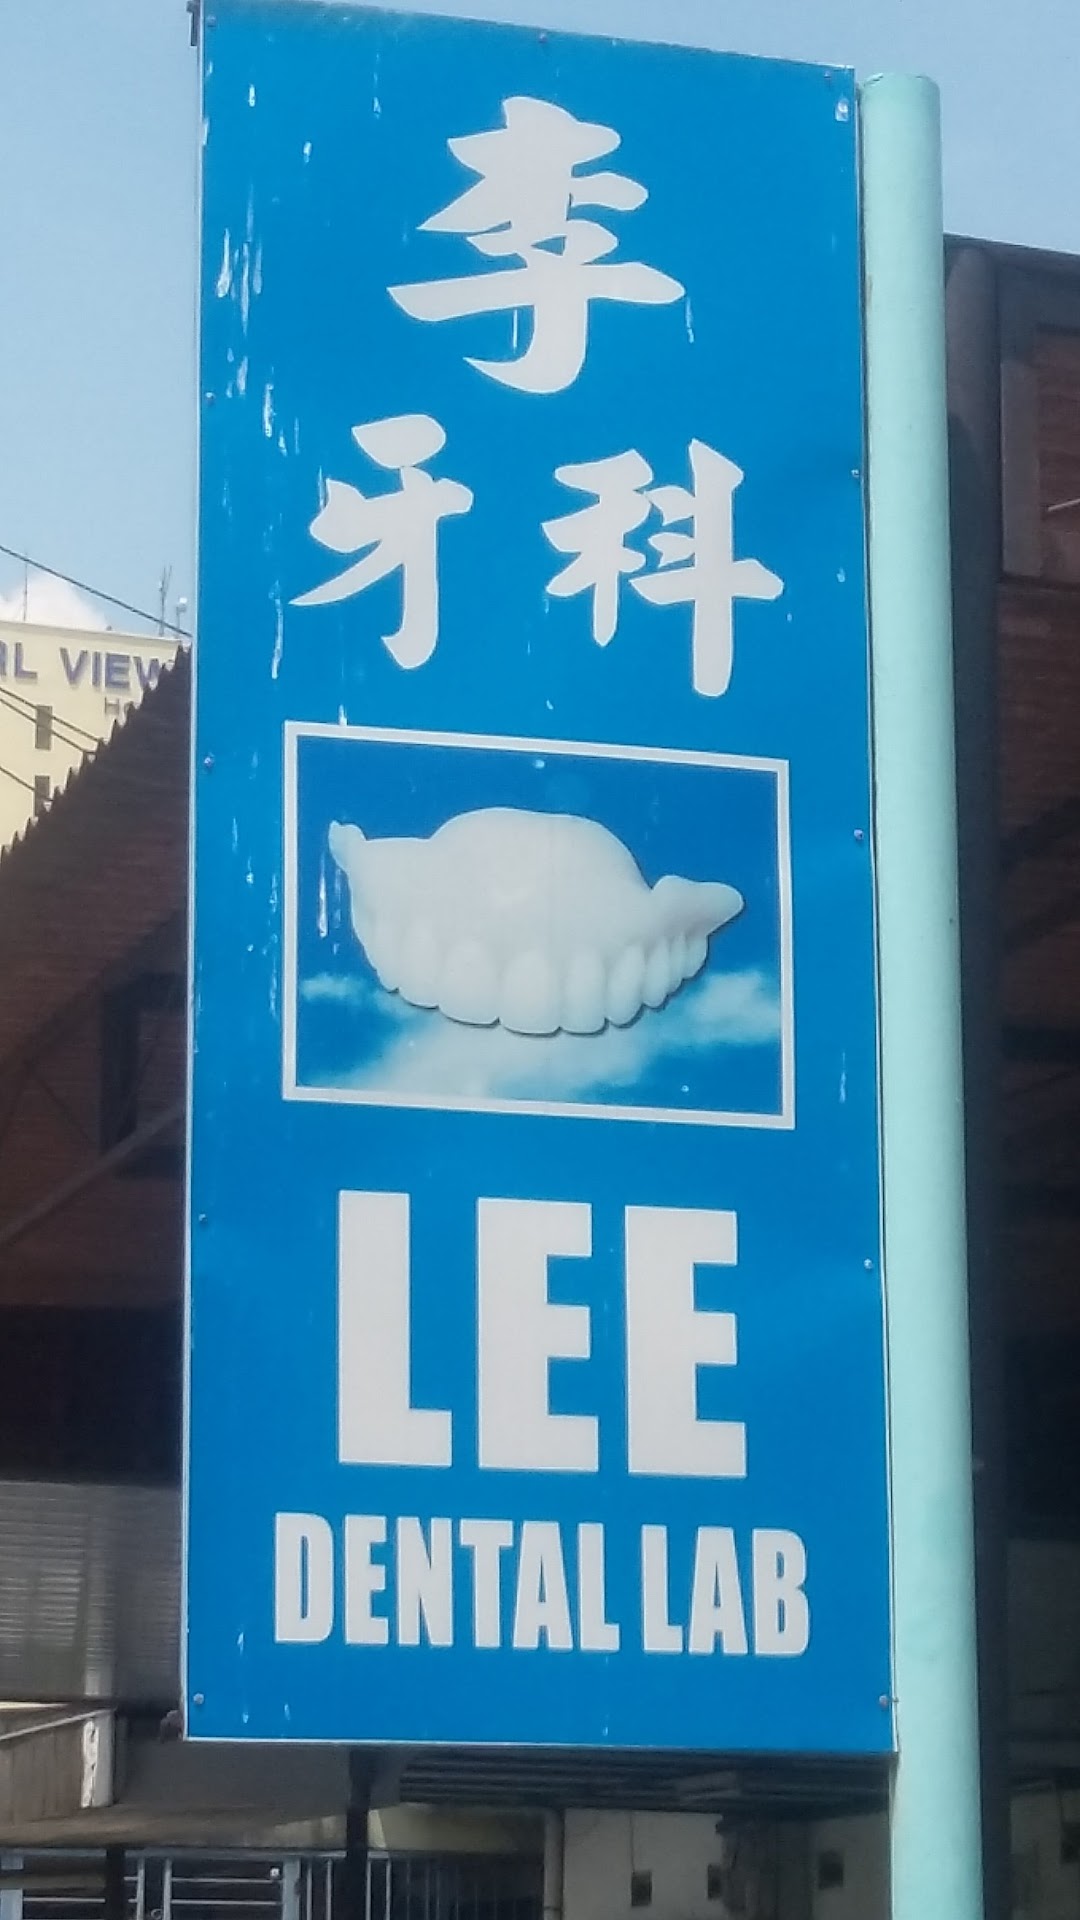 Lee Dental Lab